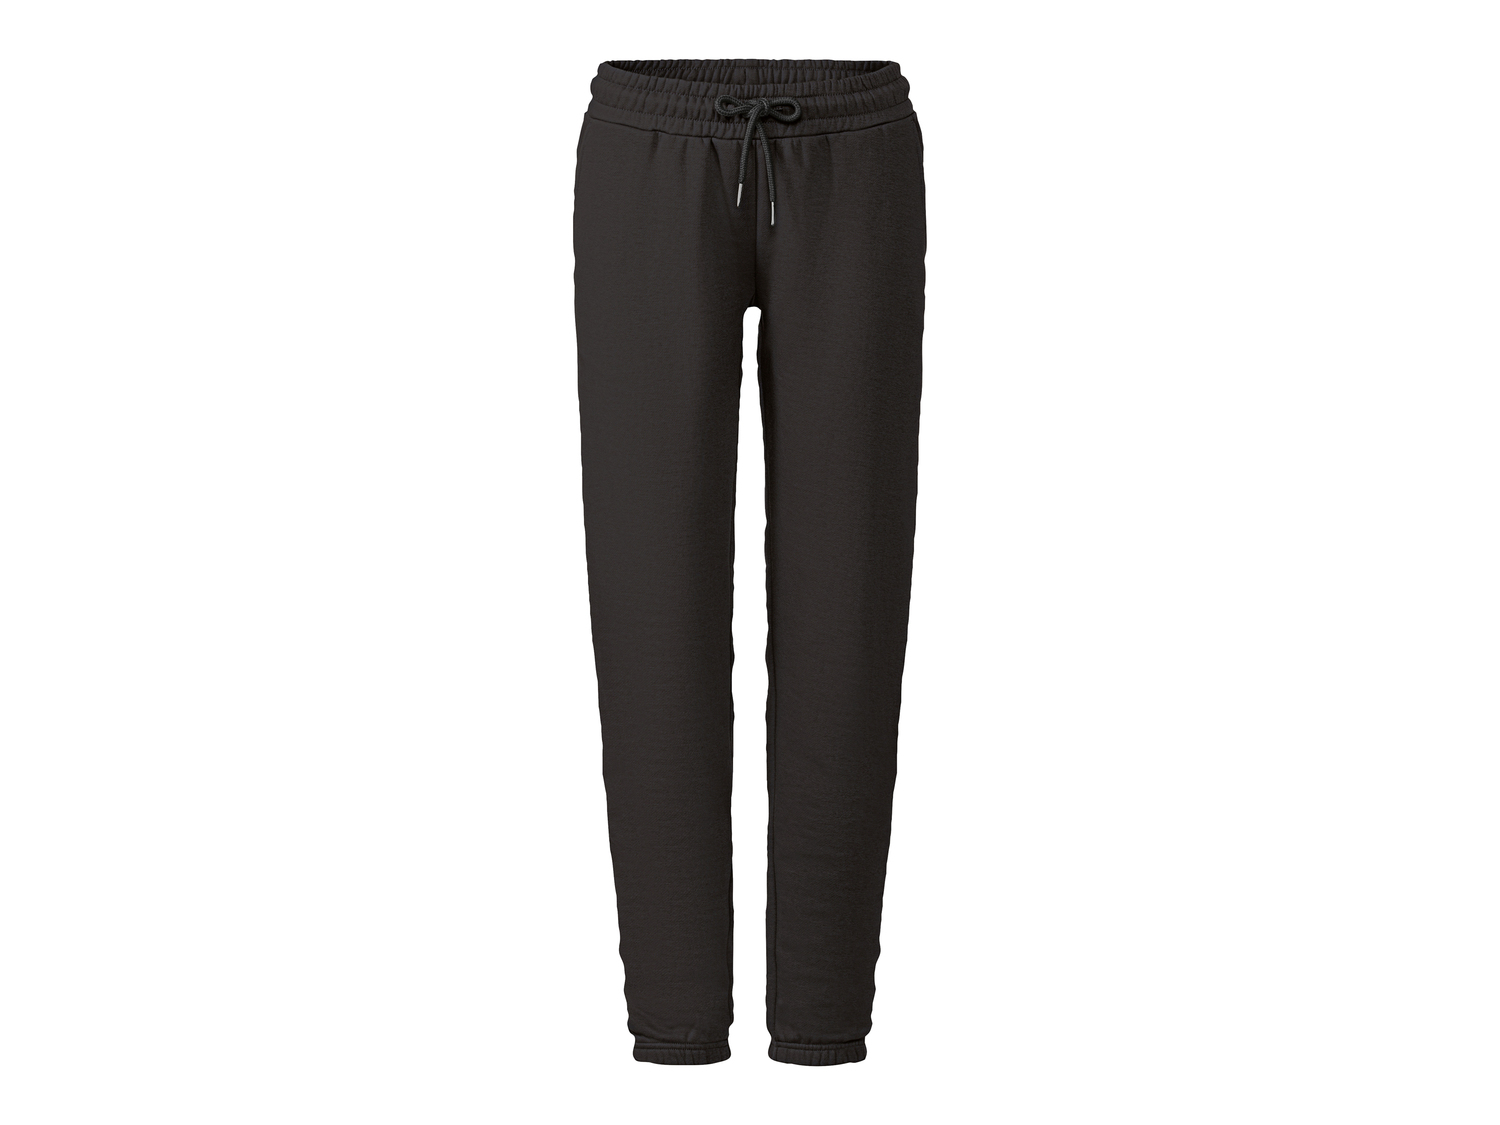 Pantaloni sportivi da donna Esmara, prezzo 12.99 &#8364; 
Misure: S-L
Taglie ...